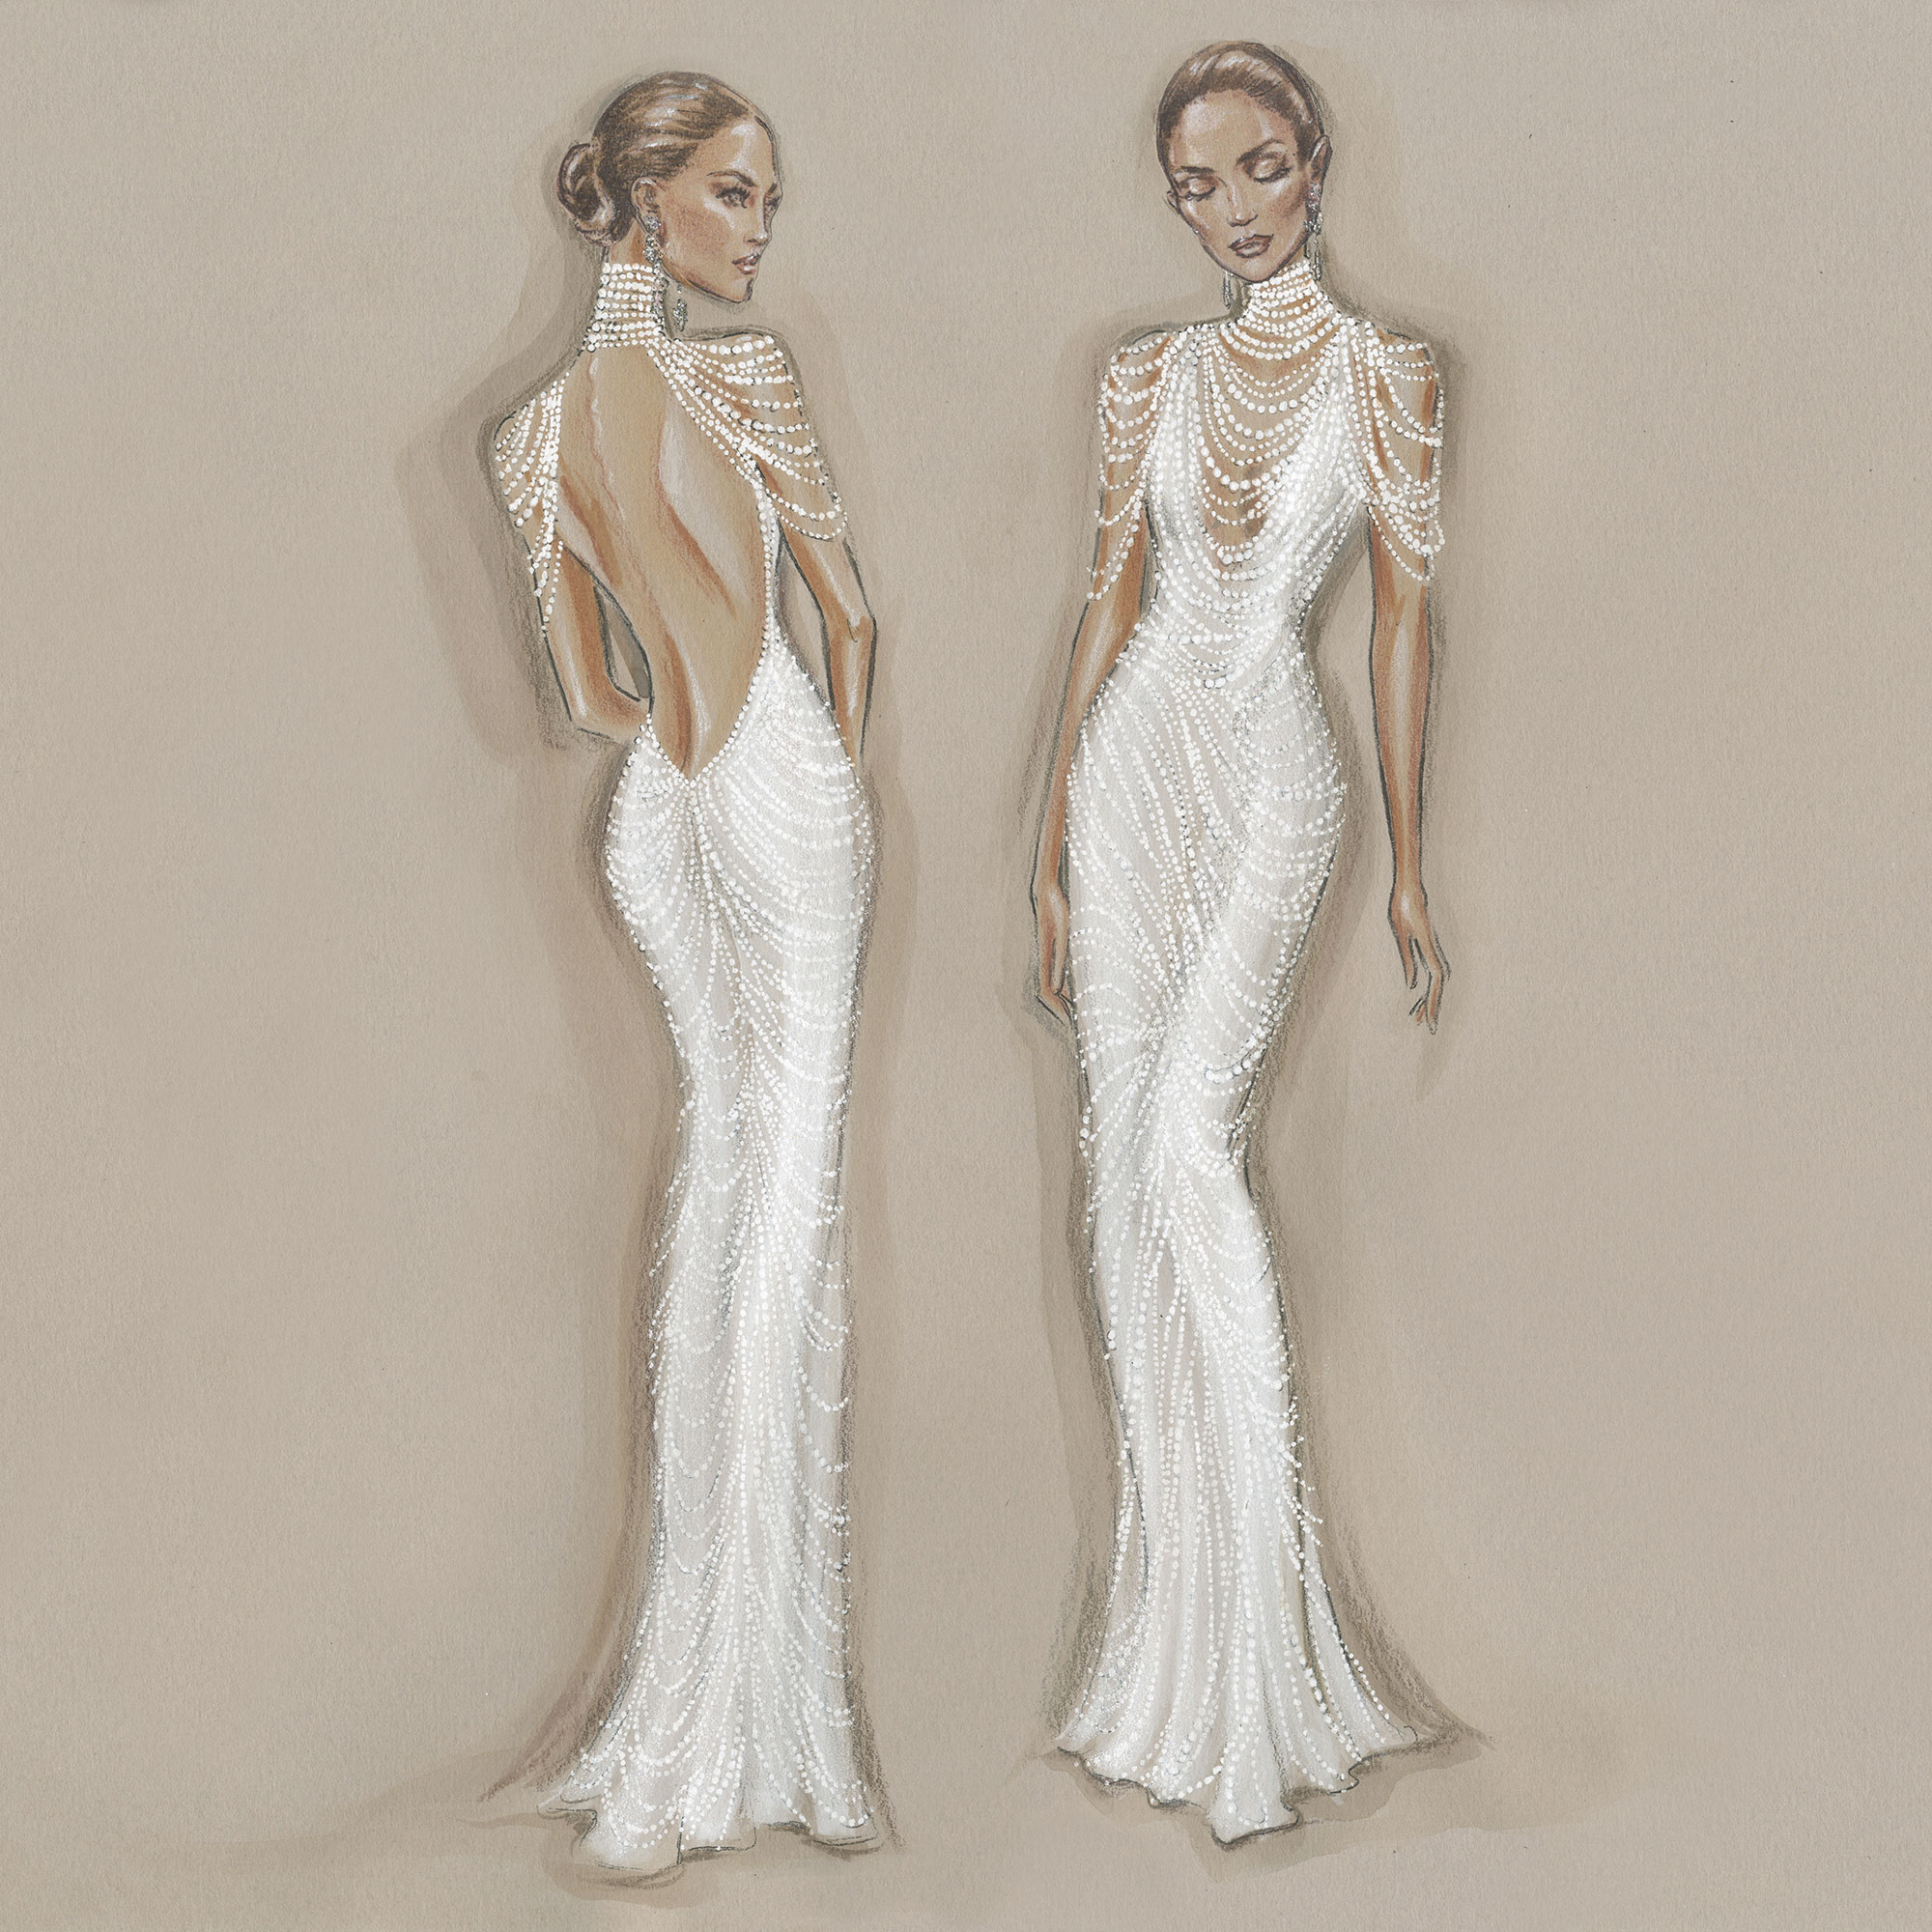 Ralph Lauren's First West Coast Fashion Show Draws Jennifer Lopez